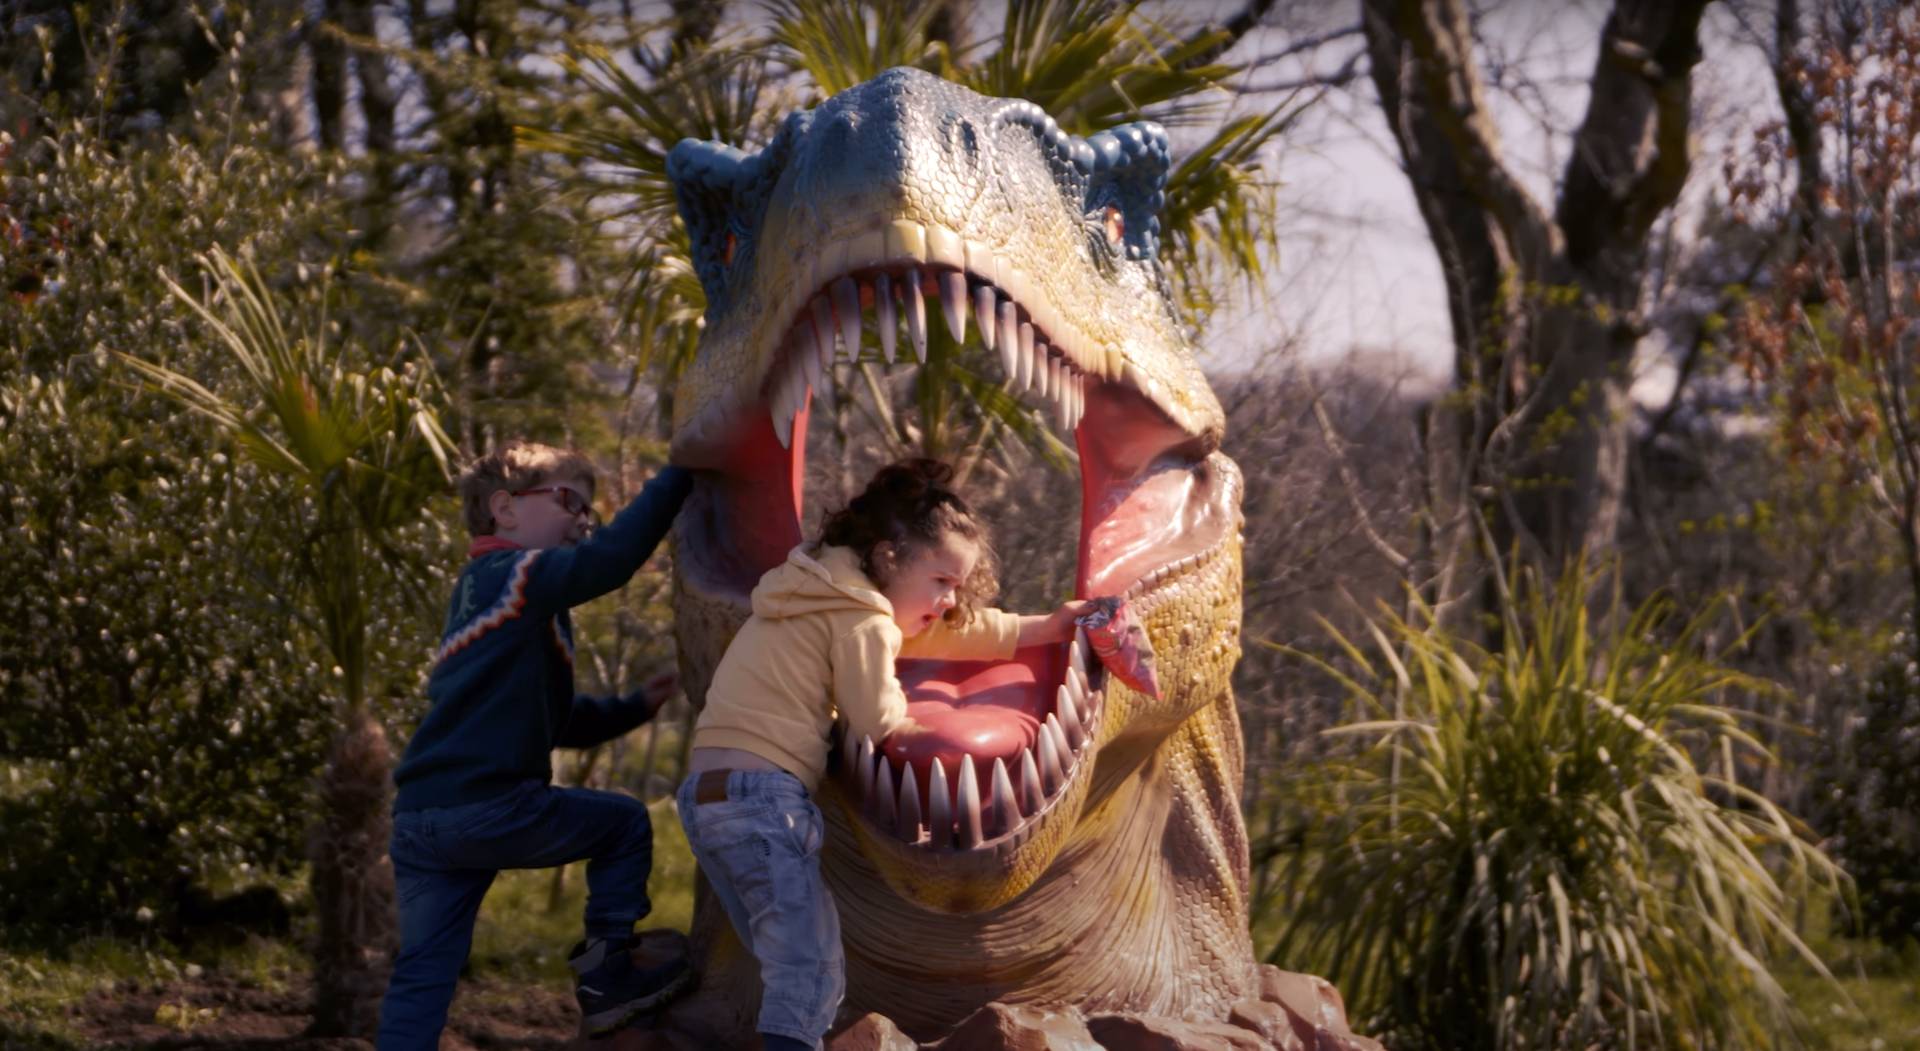 Boy and girl climbing on dinosaur at Dinosaurs! IMAGE: FoSho 2022